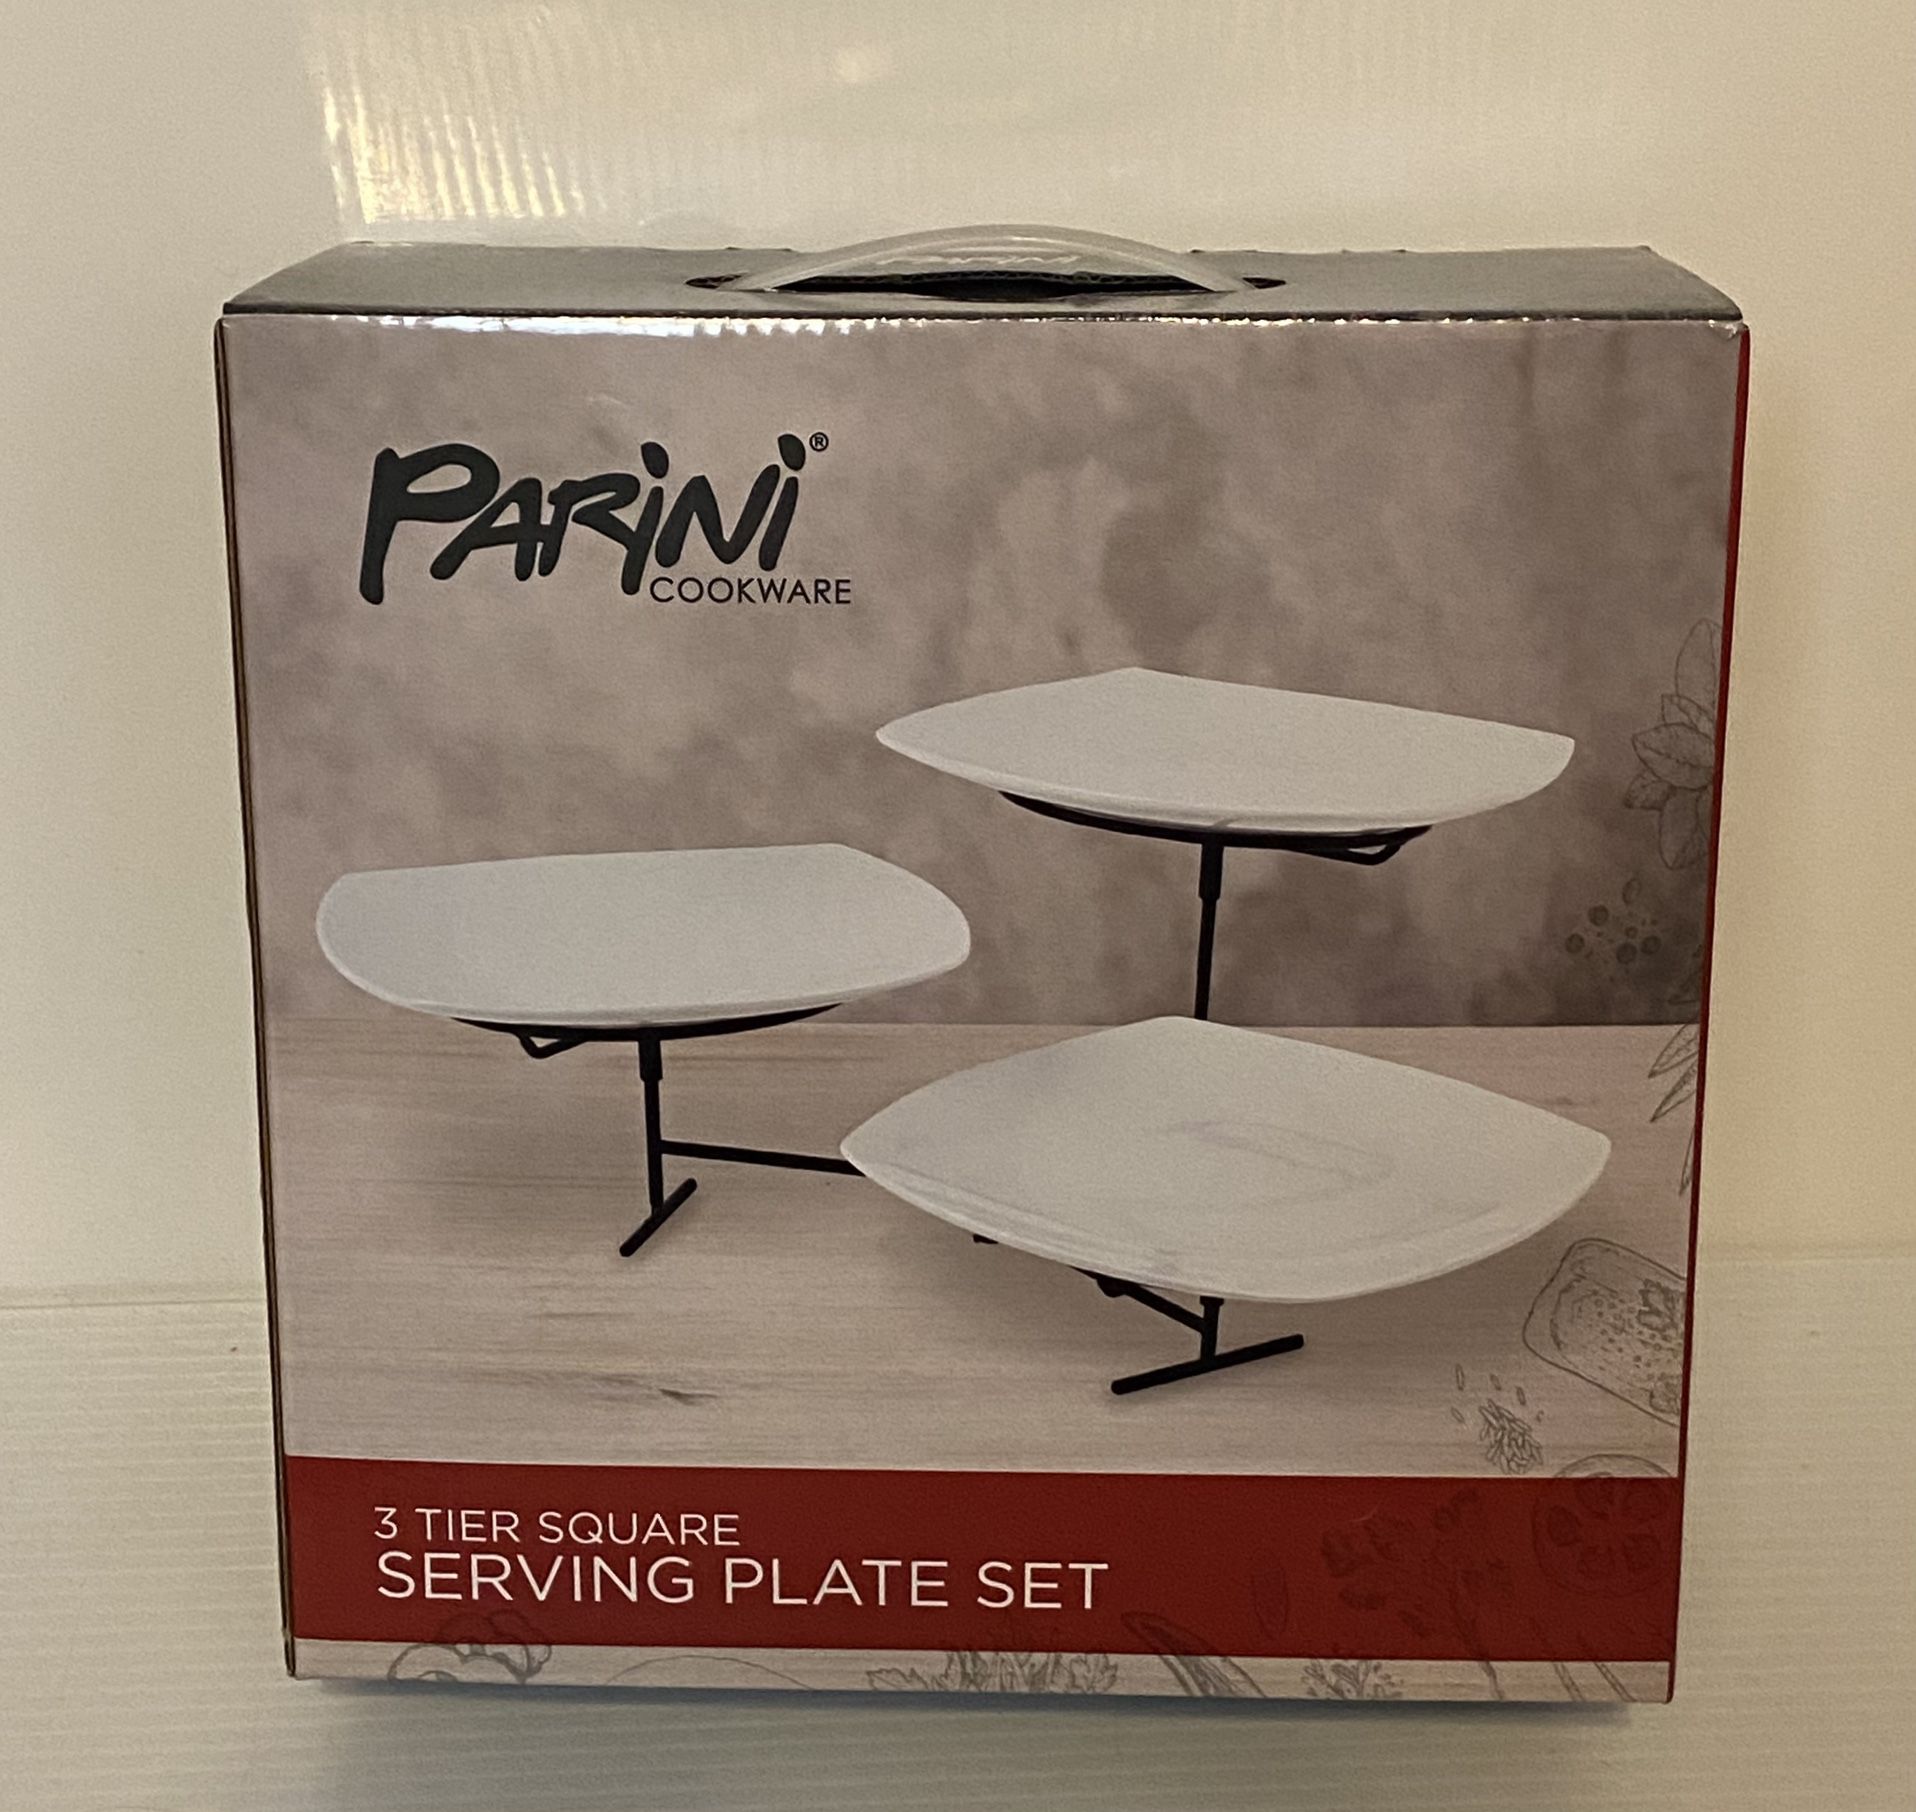 NEW Parini Cookware 3 Tier Square Serving Plate Set 